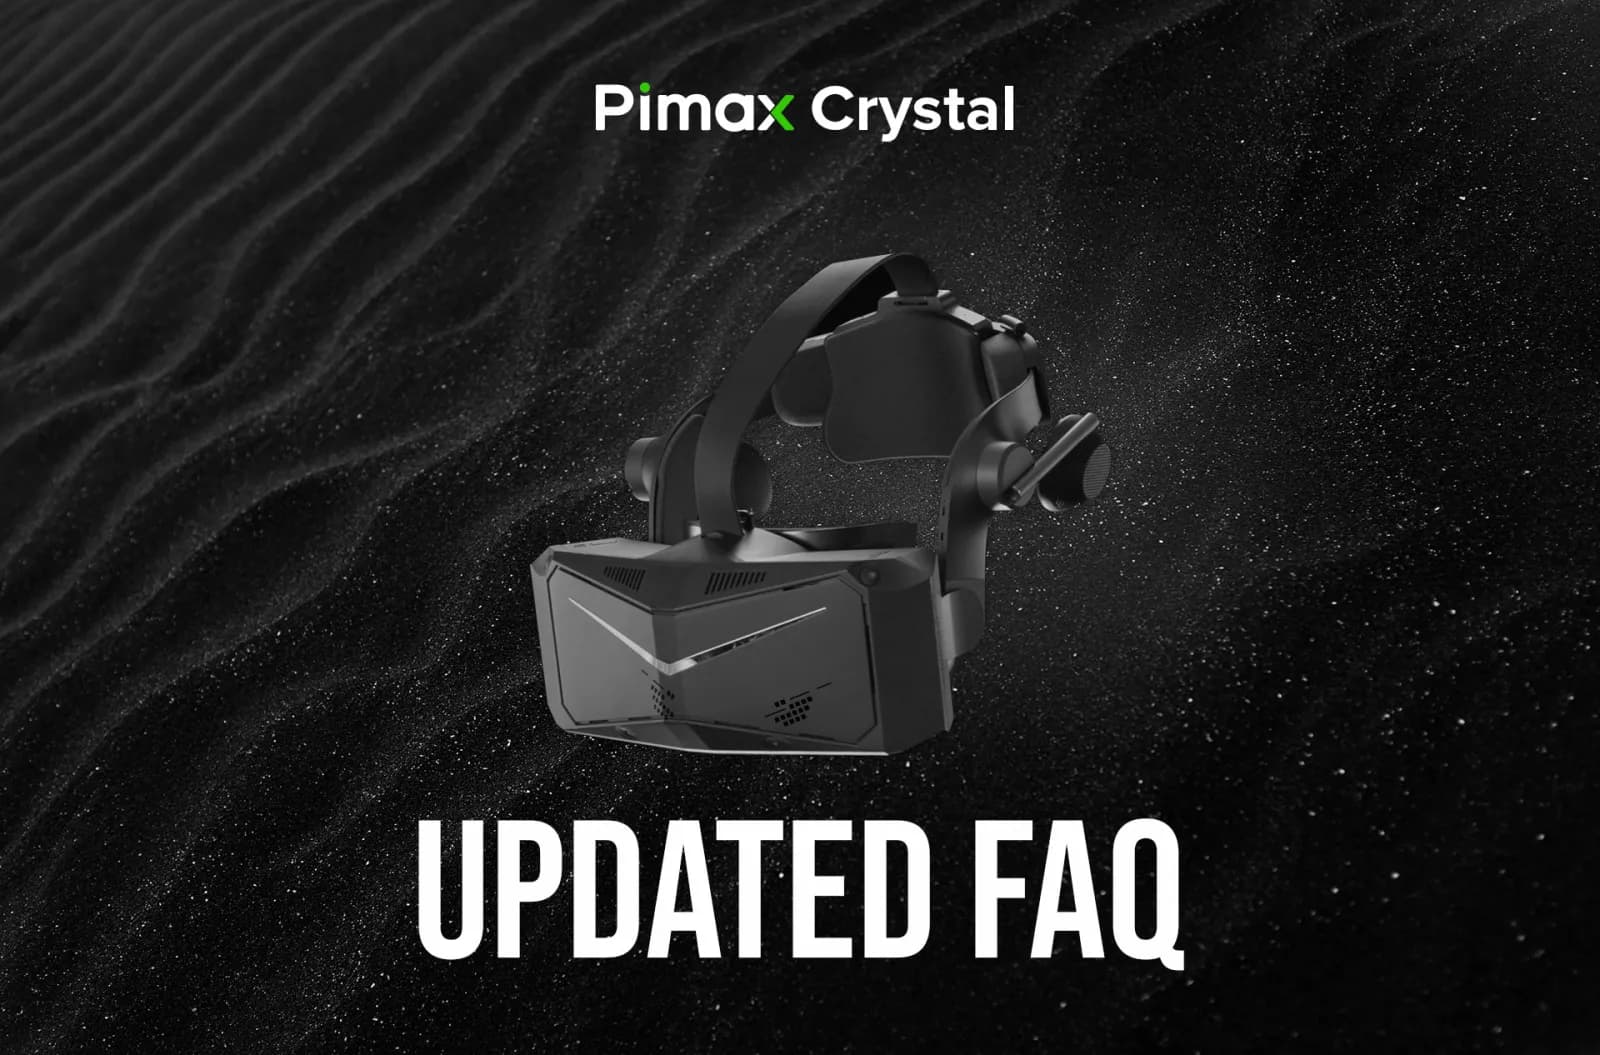 Updated Crystal FAQ